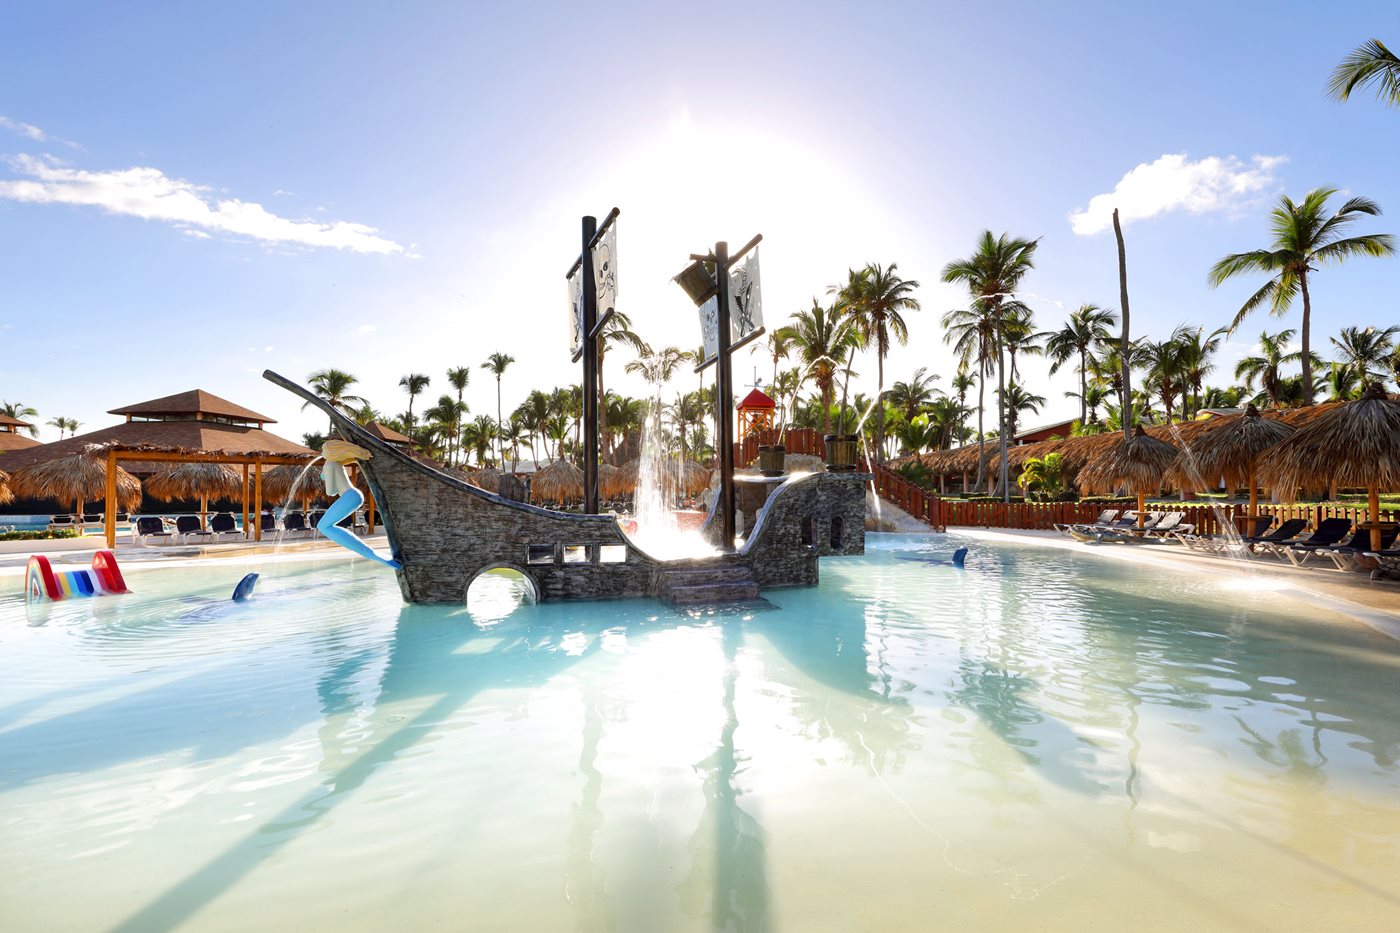 Pirate ship and kids pool at Grand Palladium Punta Cana, Grand Palladium Palace Resort, Punta Cana